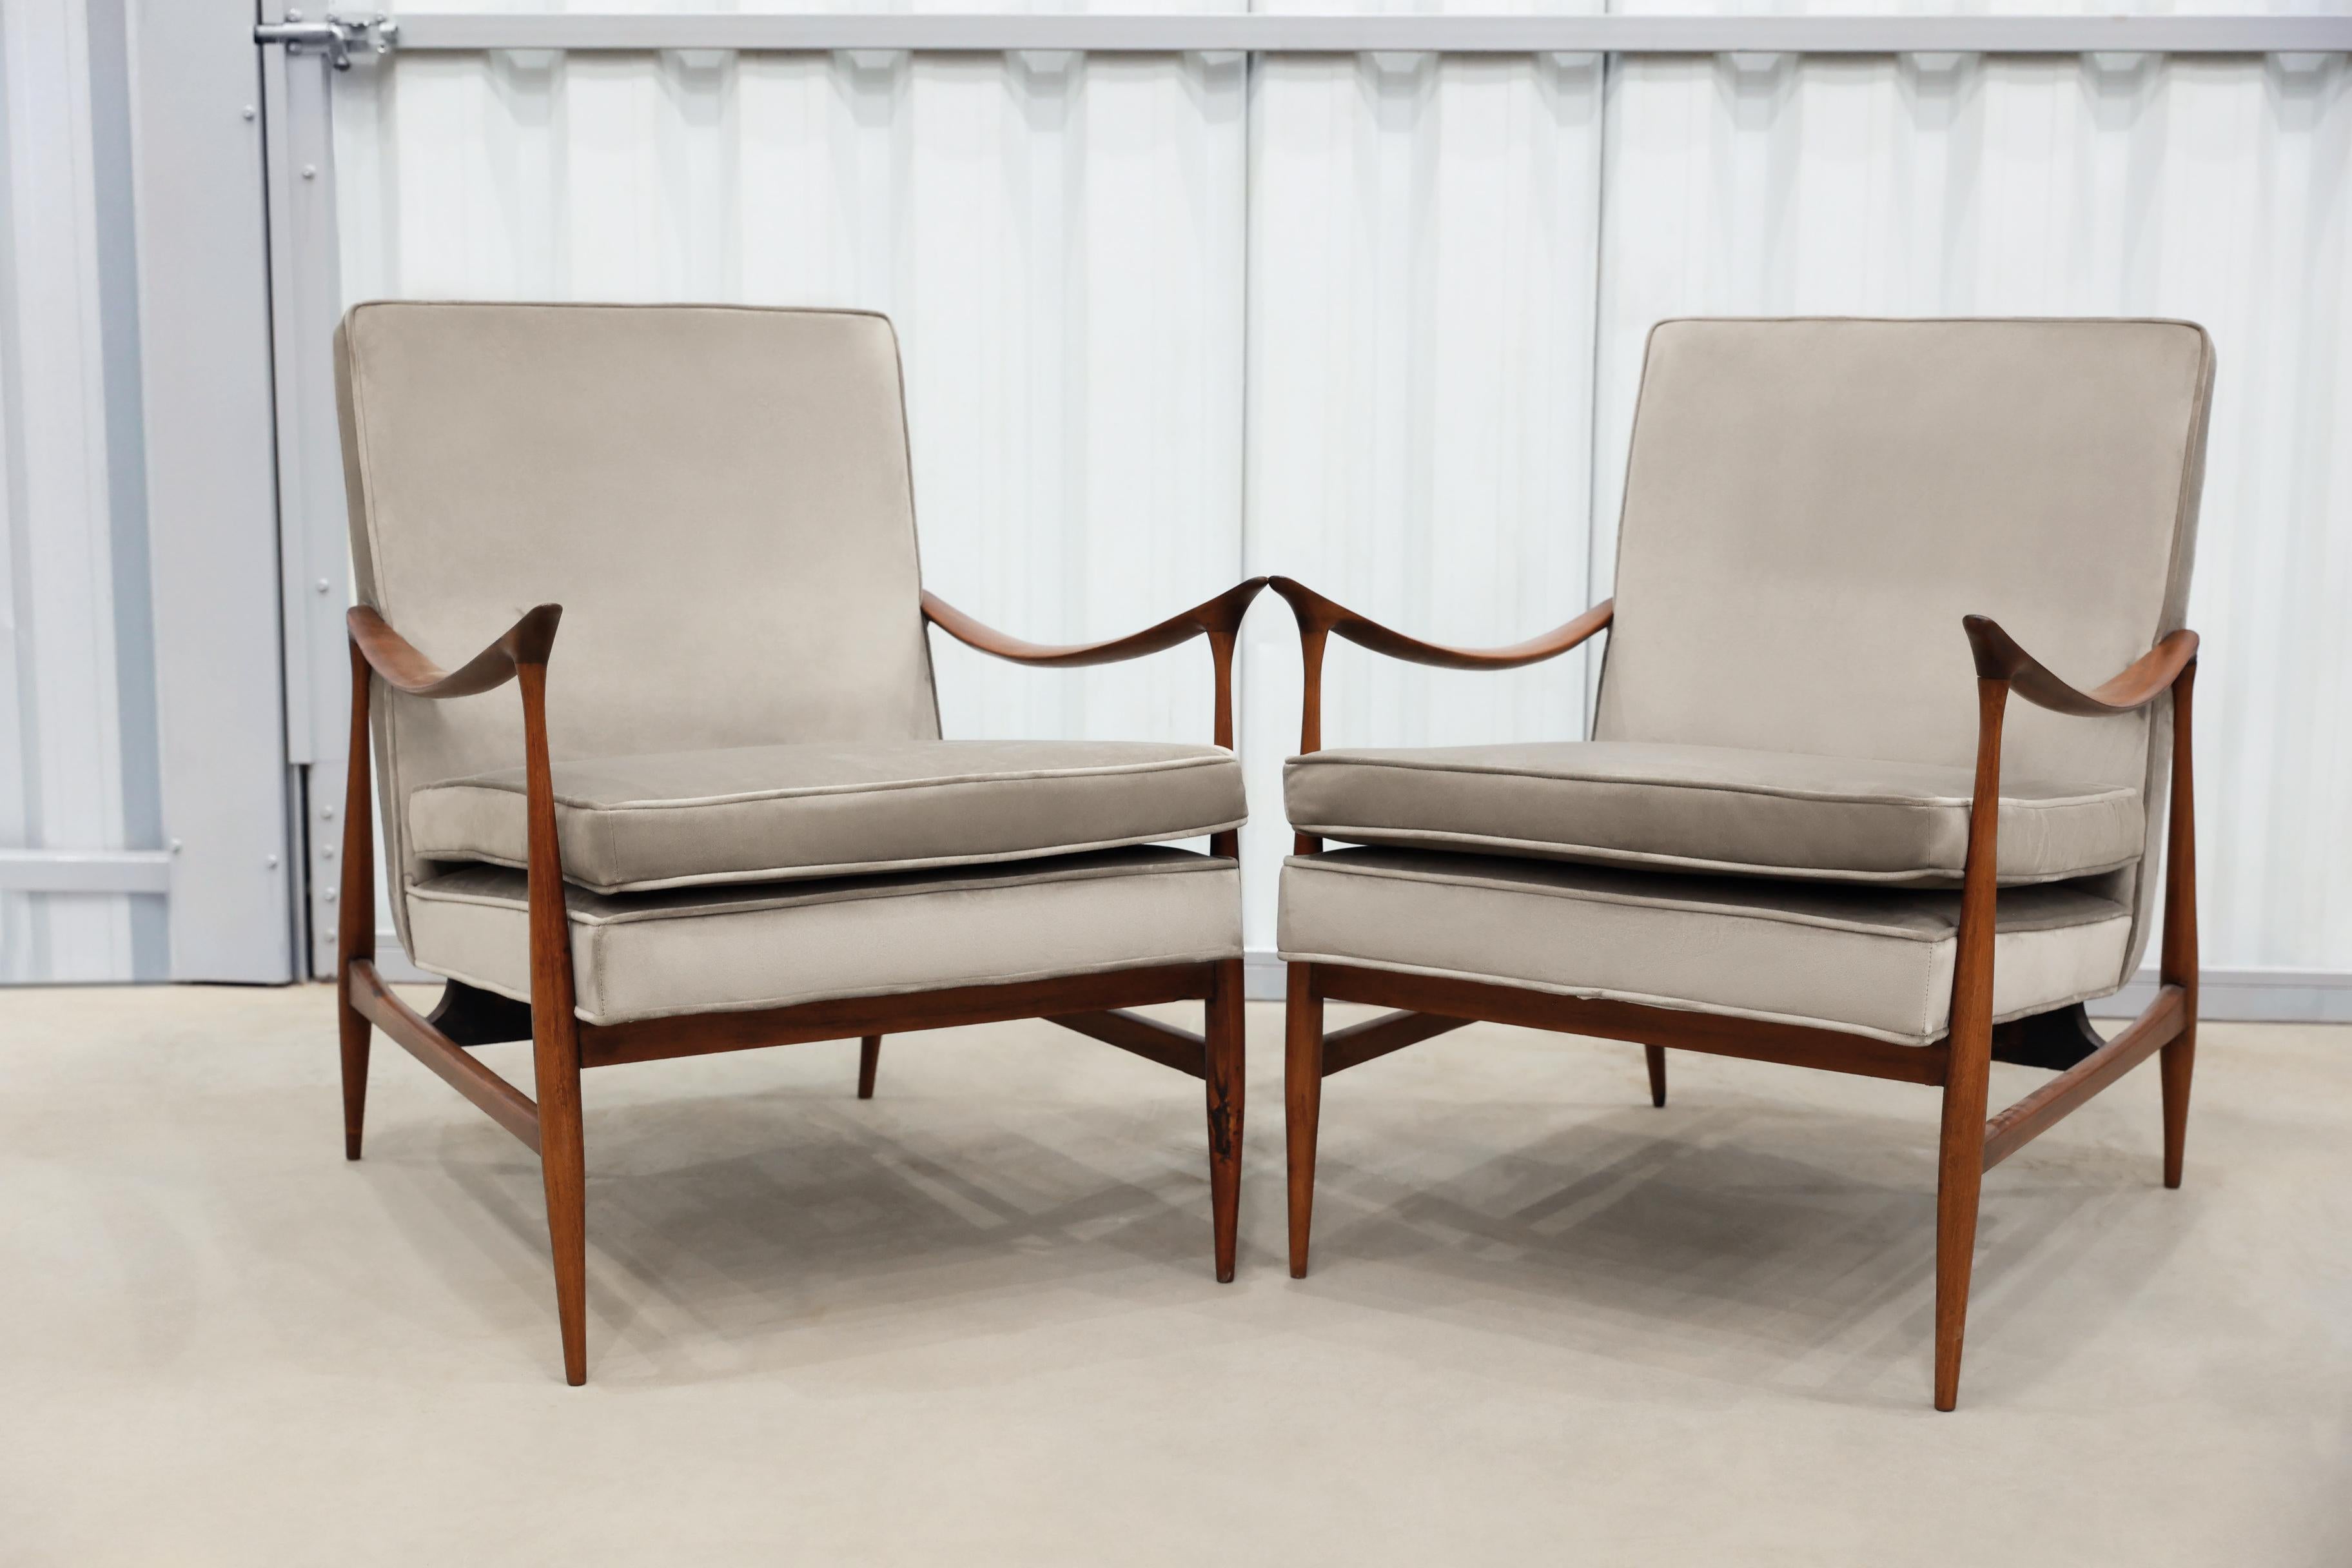 Velvet Brazilian Modern Armchairs in Hardwood & Brown Fabric, Jorge Zalszupin, c. 1950s For Sale